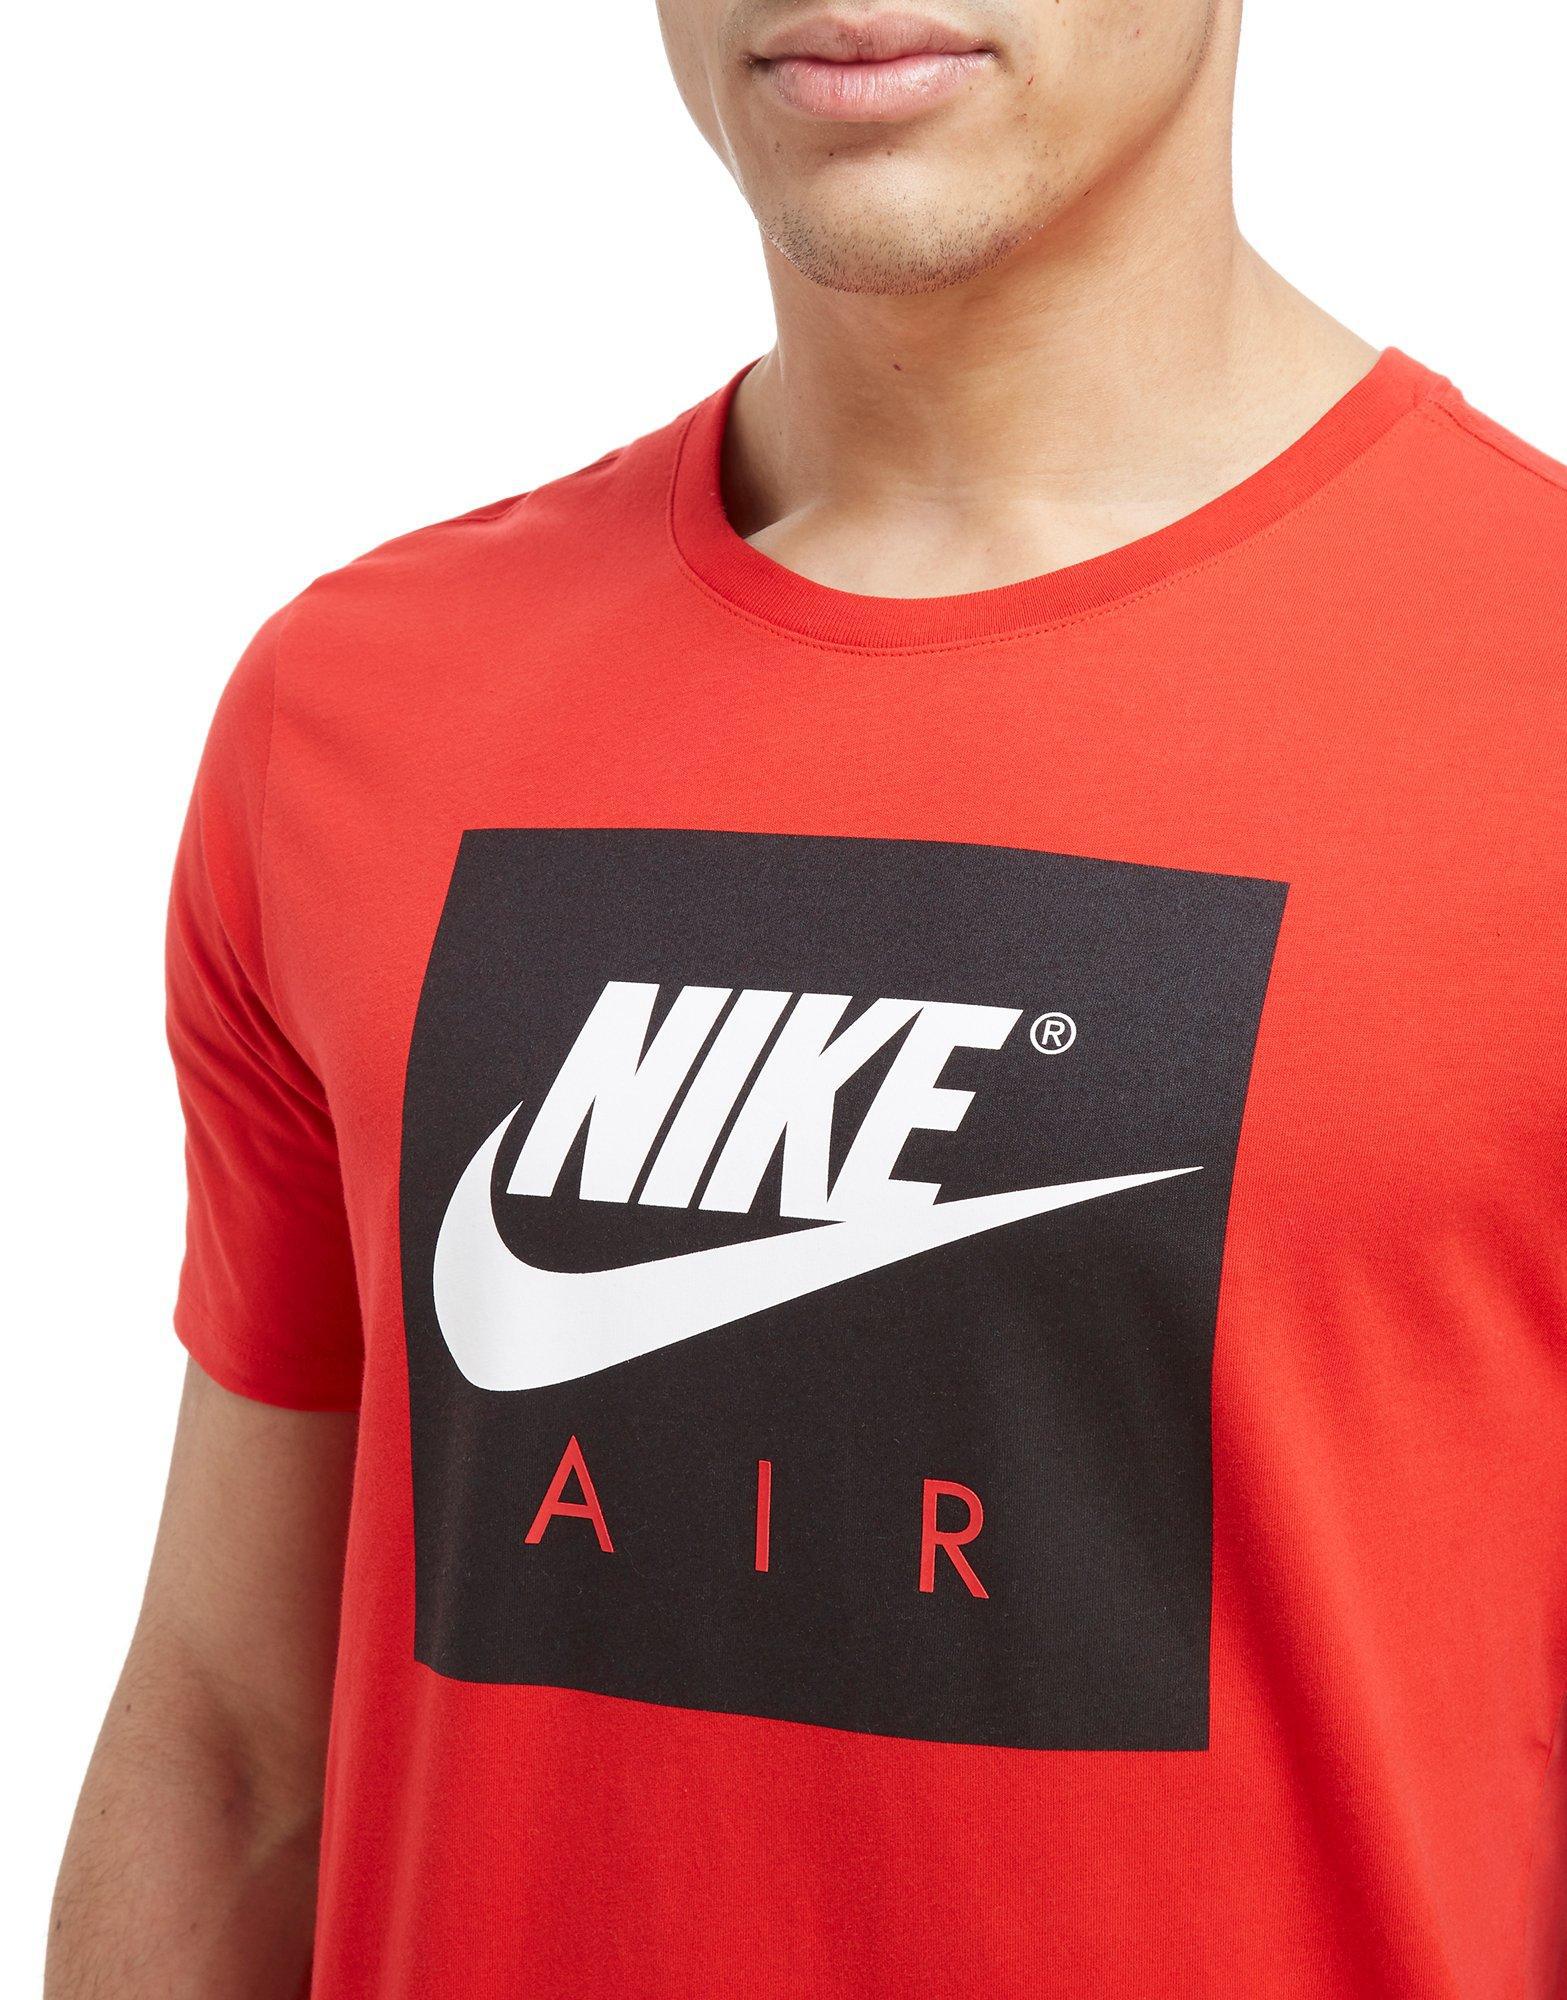 black nike shirt with red logo